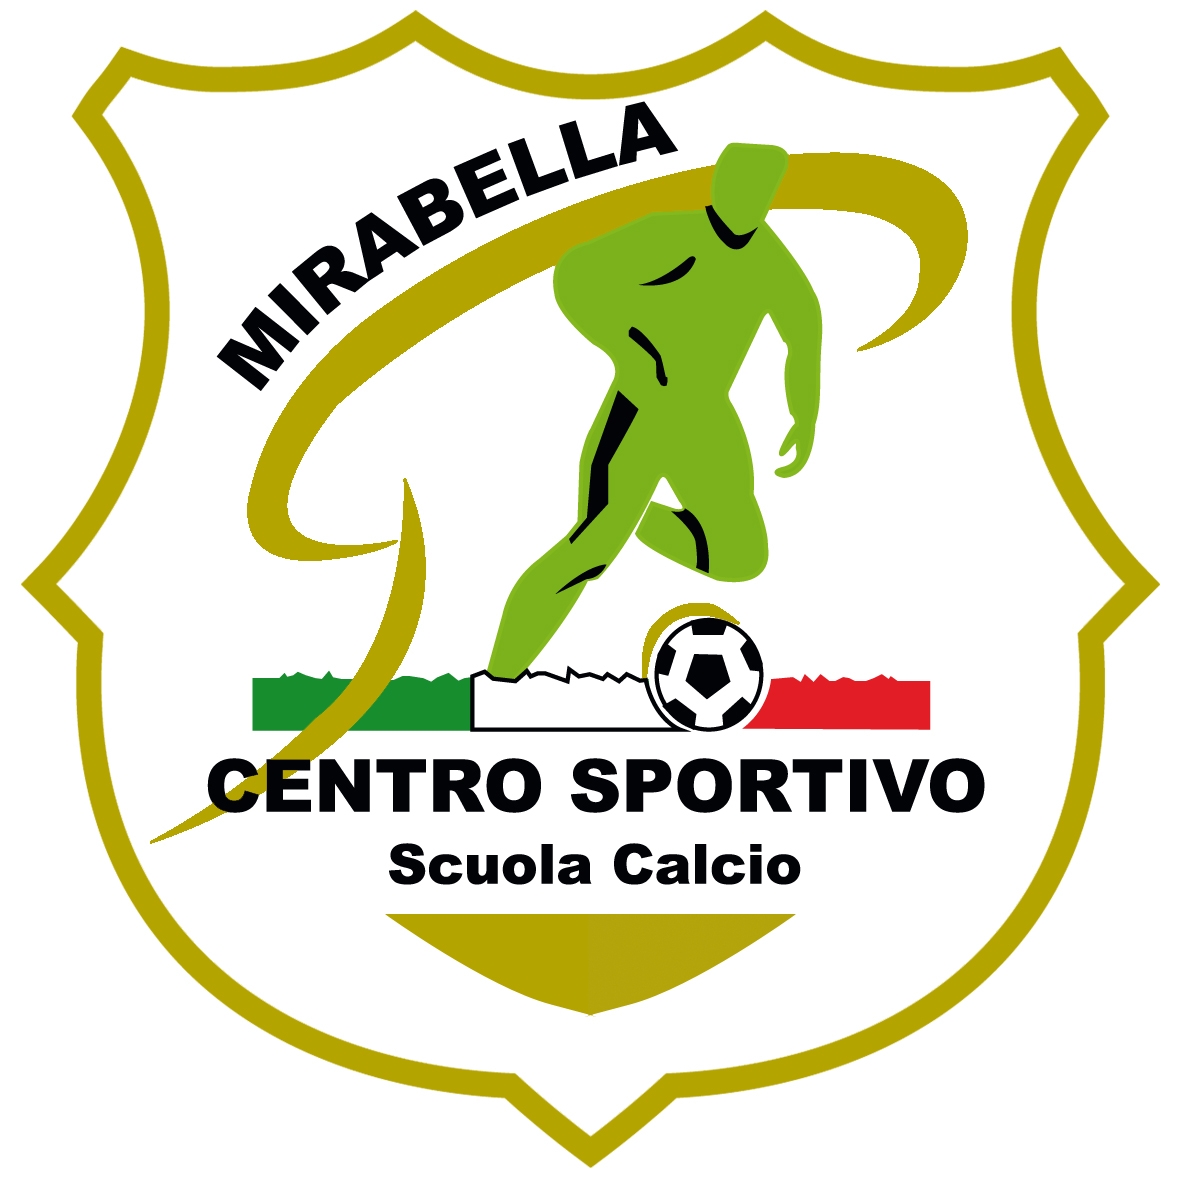 Mirabella Logo SCUDO BARCA.JPG - 338.72 KB